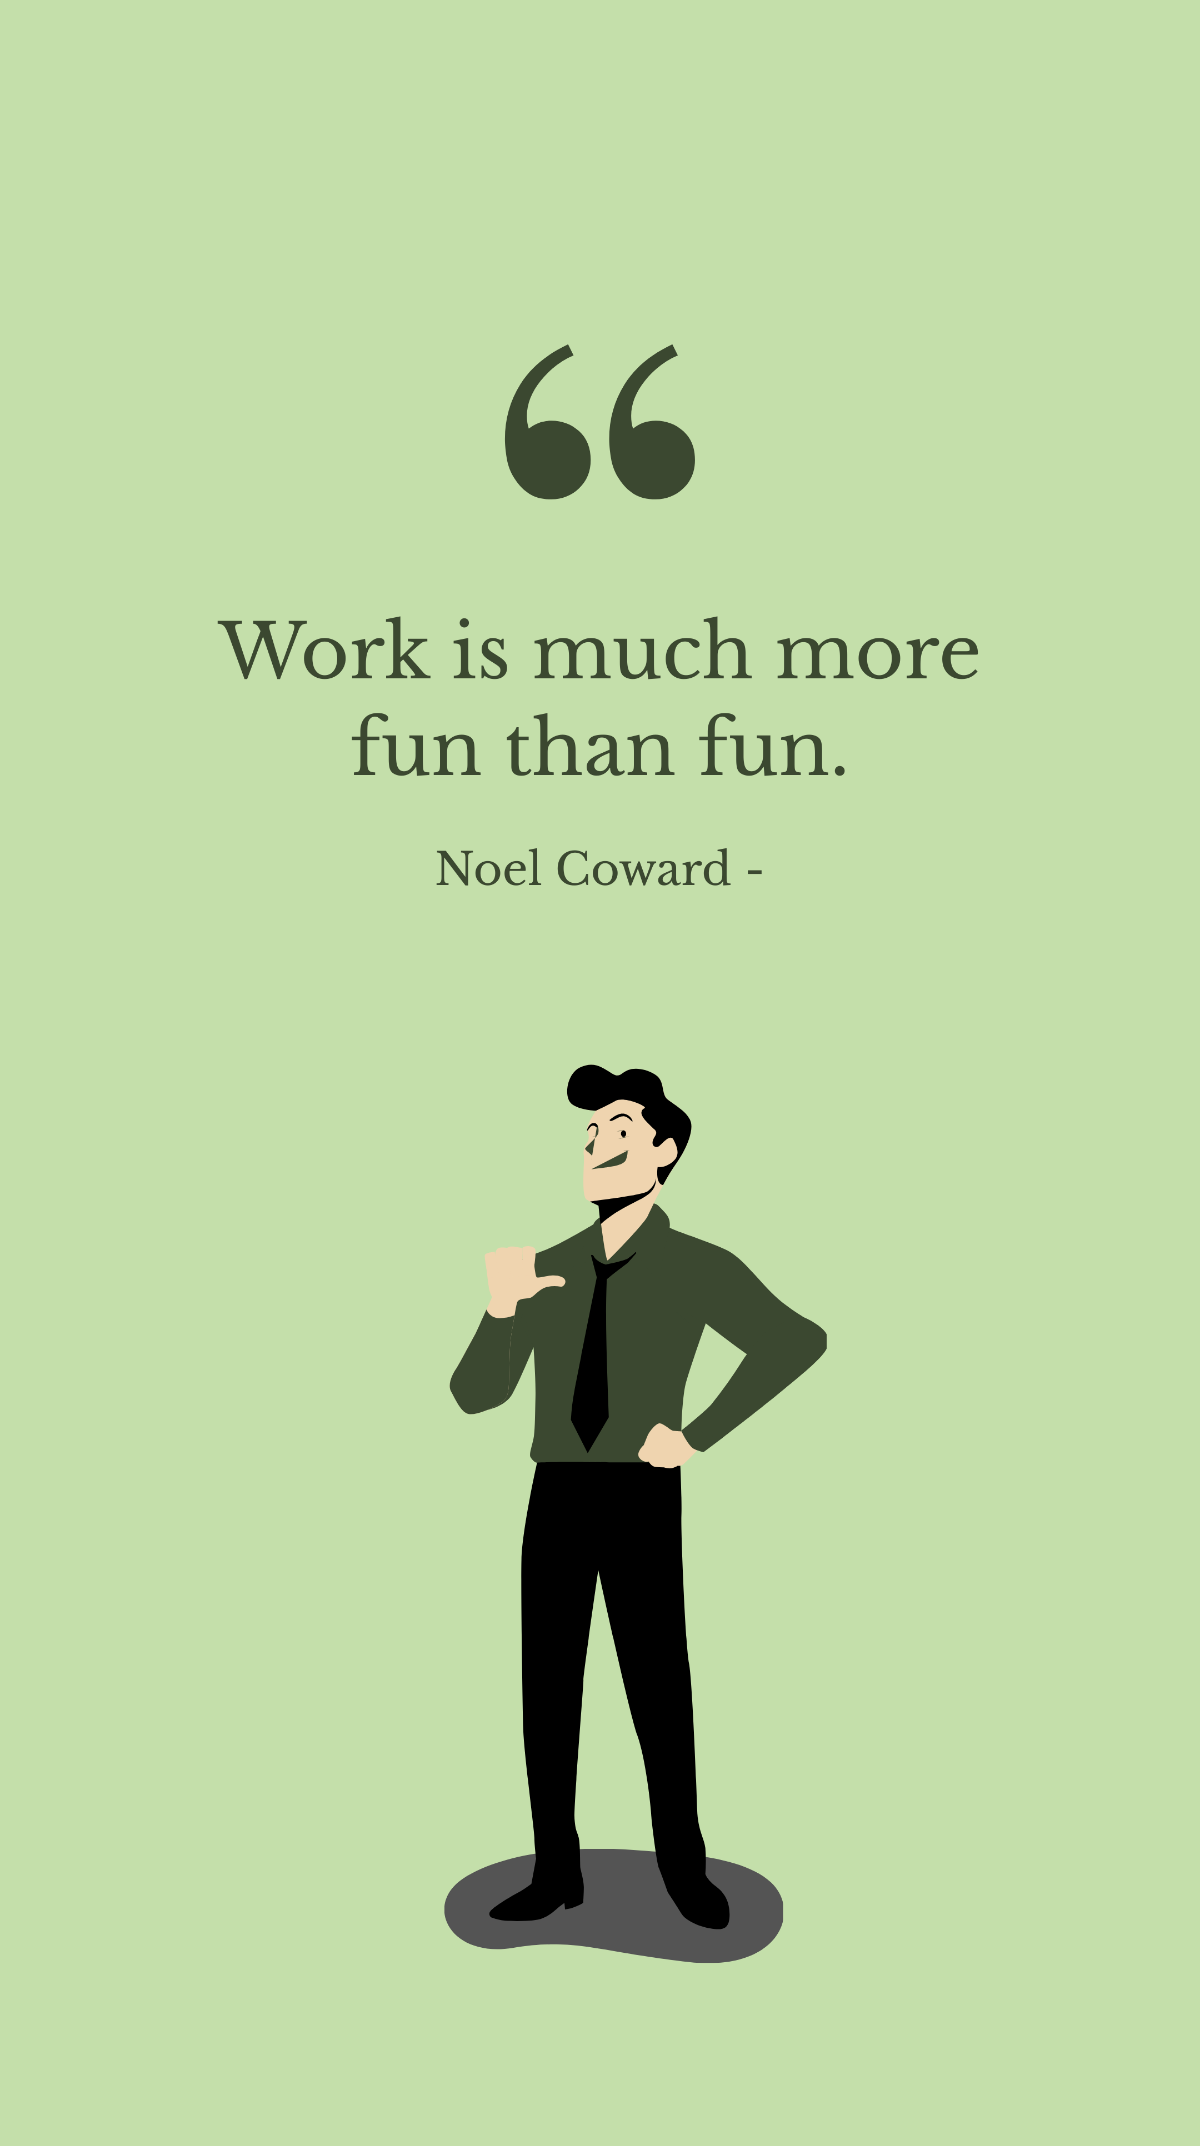 Noel Coward - Work is much more fun than fun.